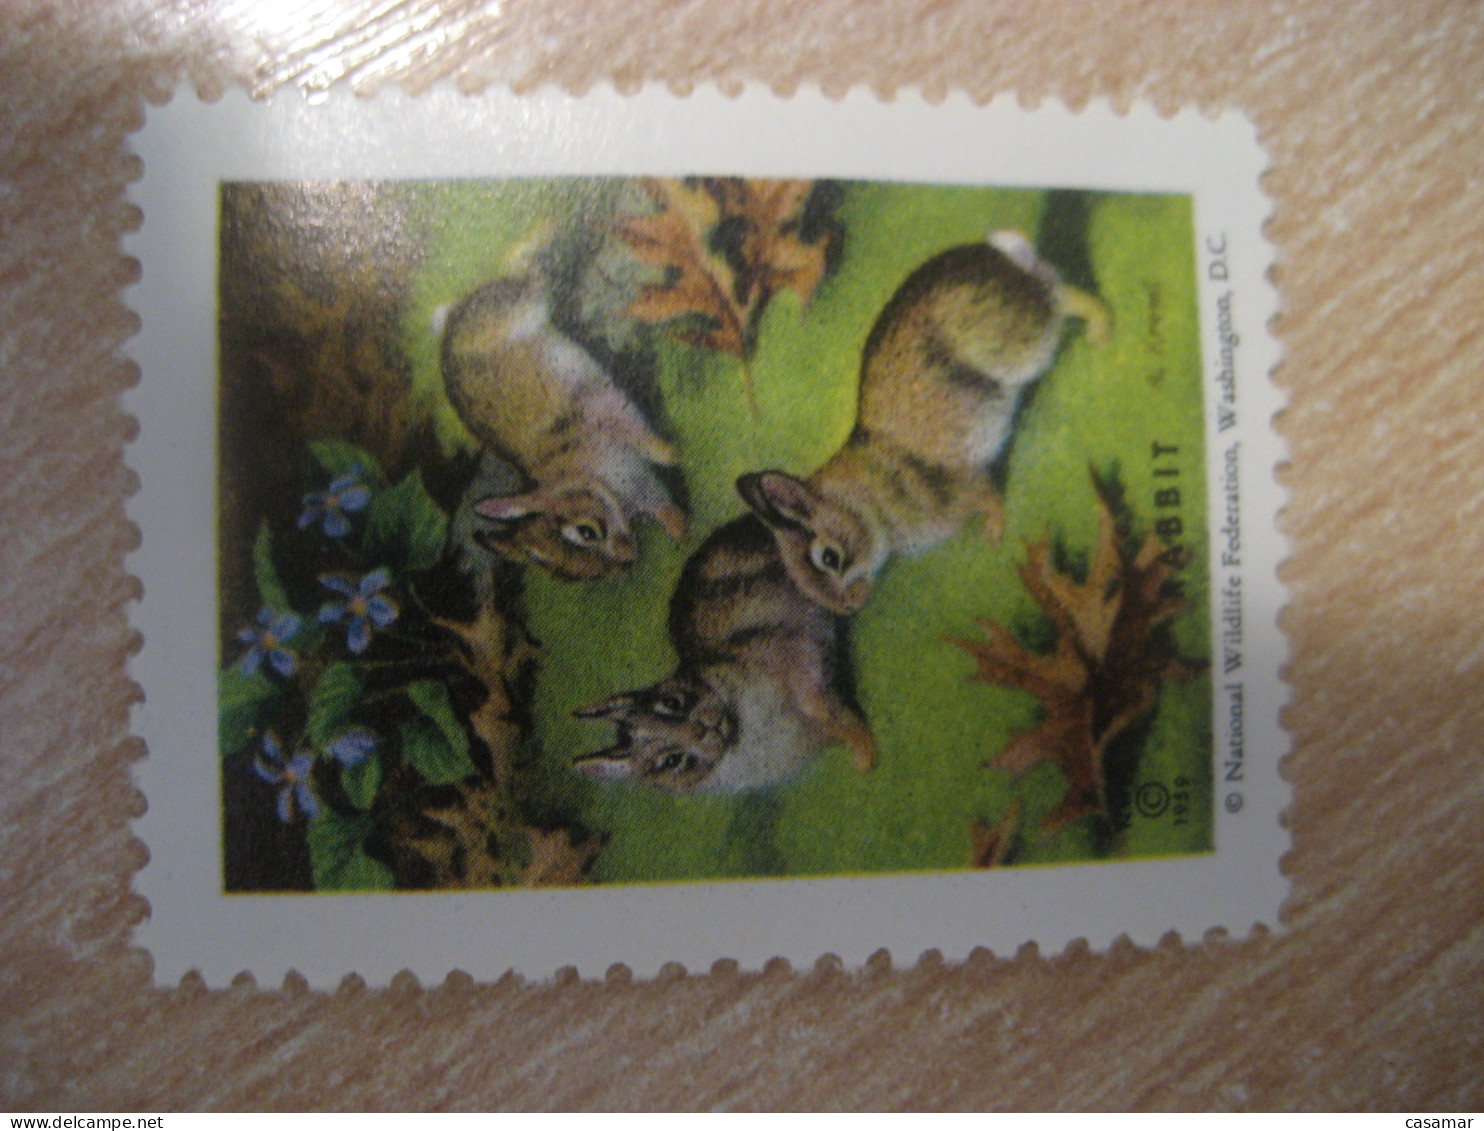 WASHINGTON 1959 Rabbit Lapin National Wildlife Federation Poster Stamp Vignette USA Label - Lapins